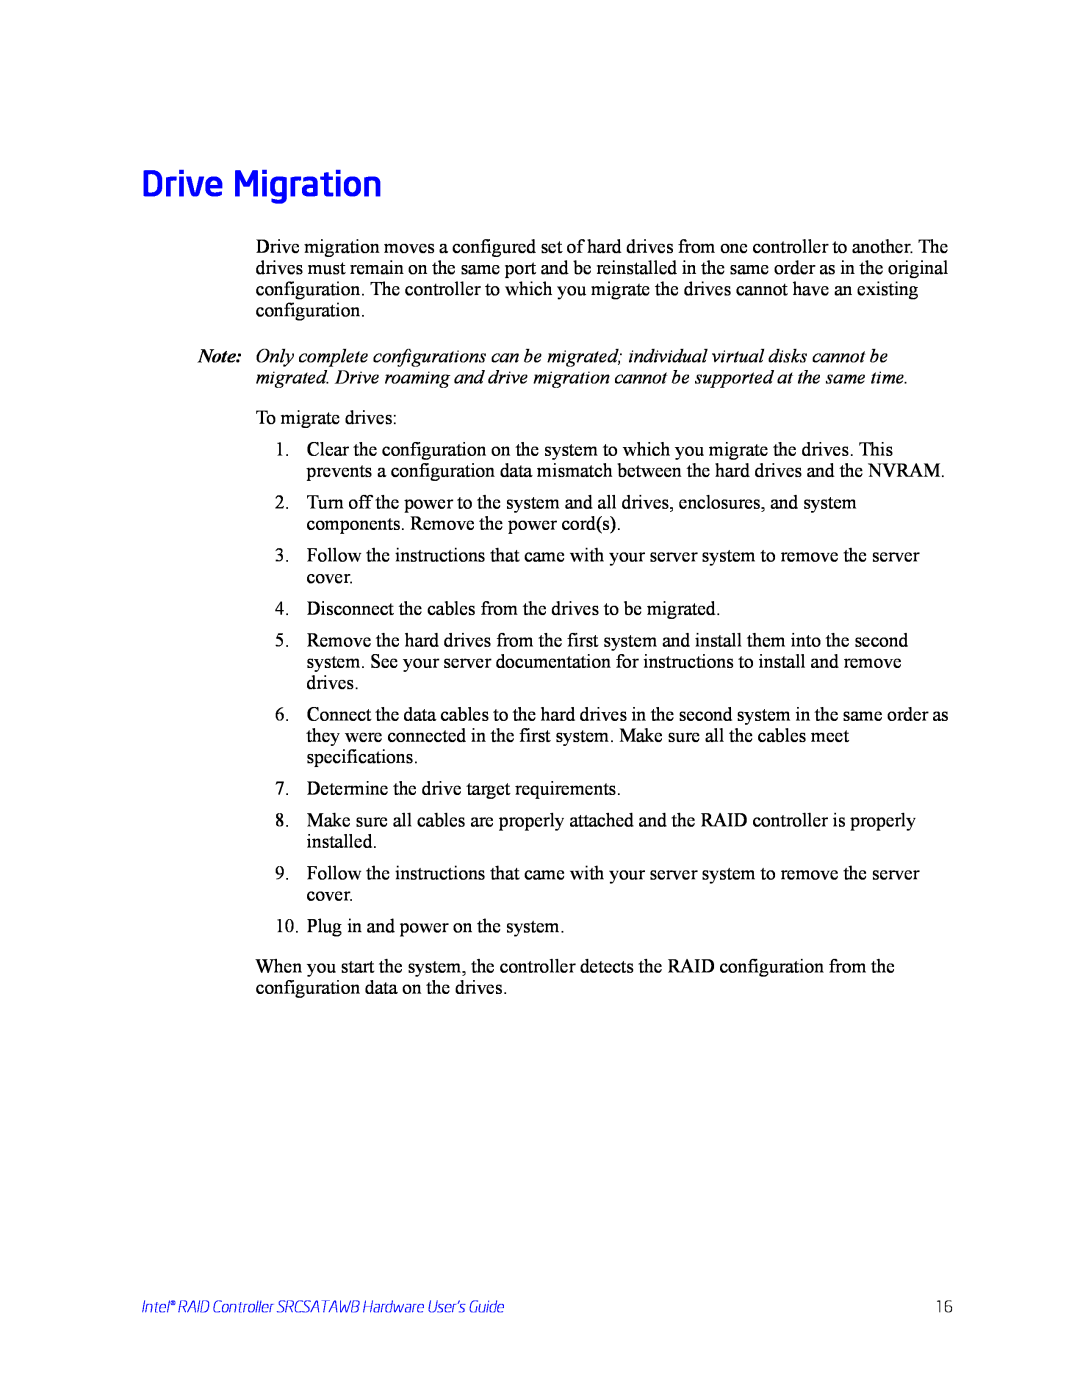 Intel SRCSATAWB manual Drive Migration 